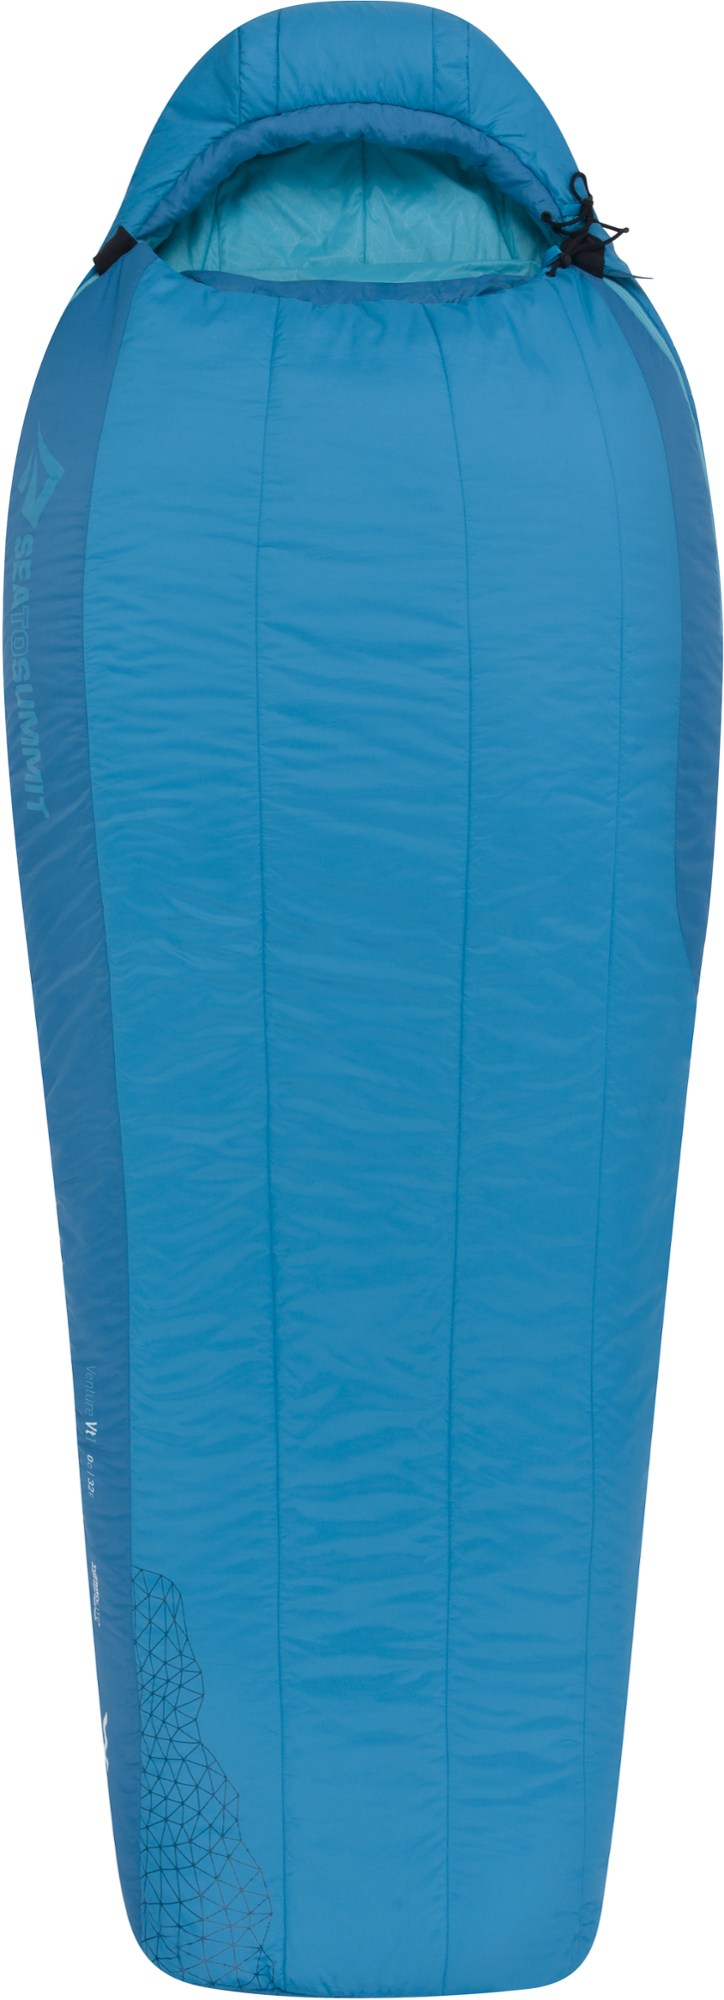 Спальный мешок Venture VTI 32 - женский Sea to Summit, синий